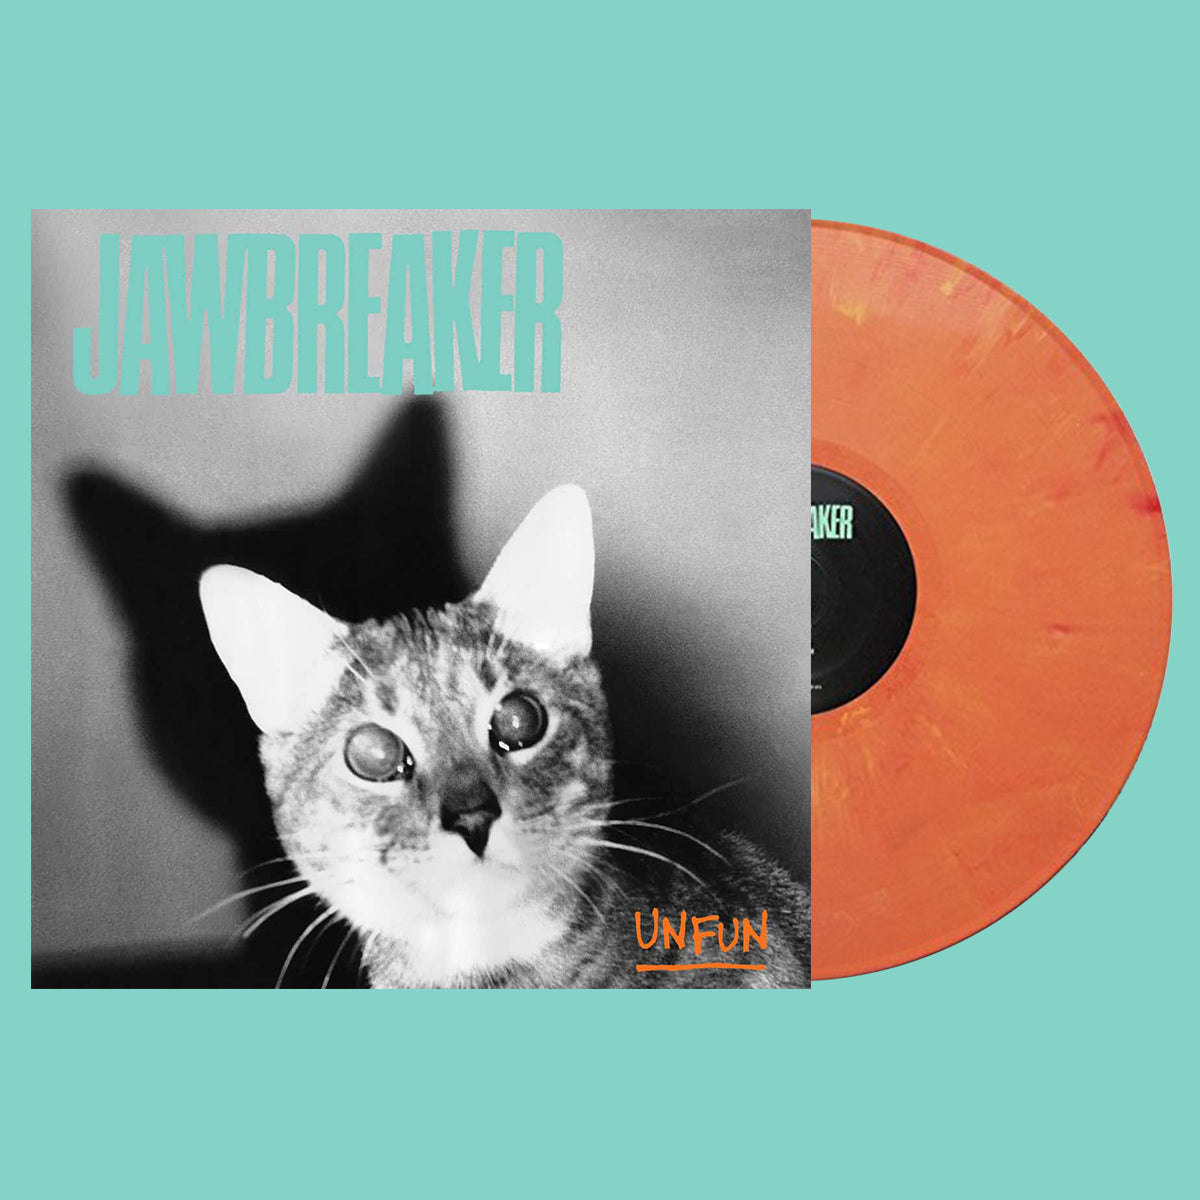 JAWBREAKER - Unfun - LP - Orange Vinyl